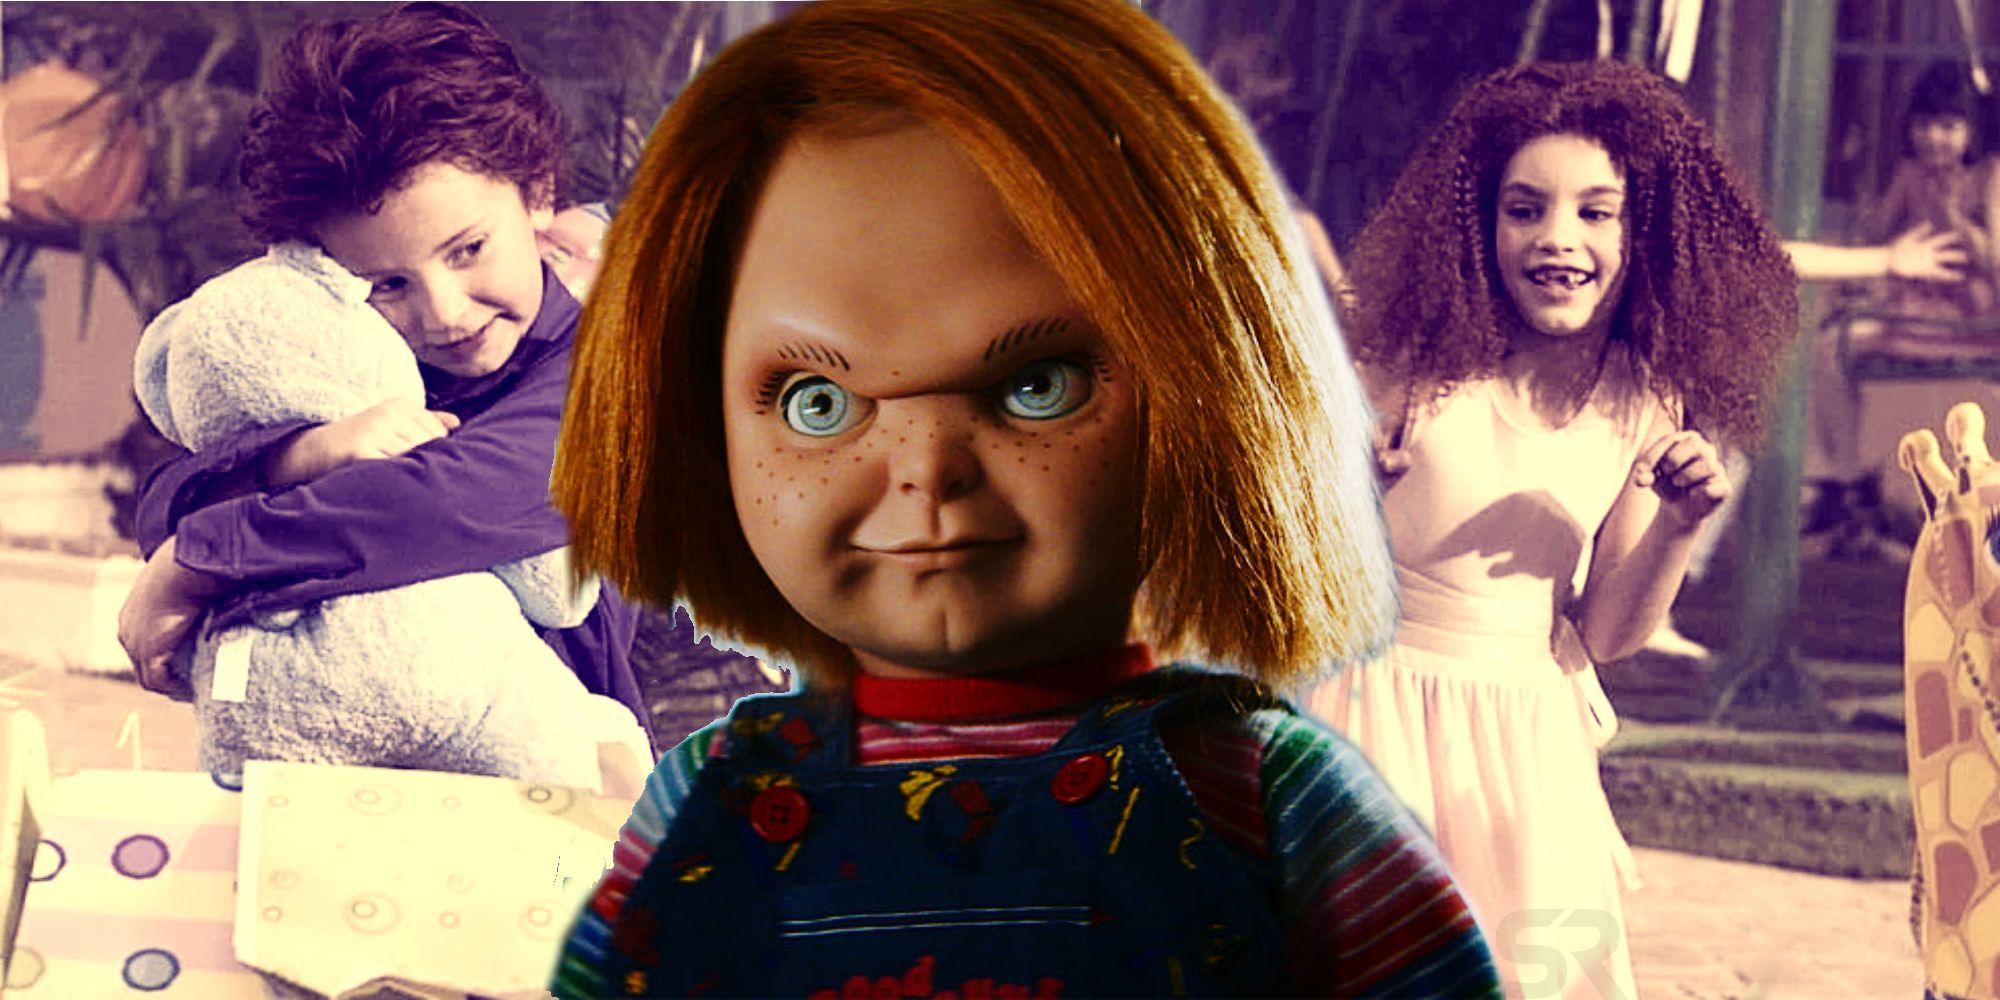 Brad Dourif as Chucky with Human Glen and Glenda